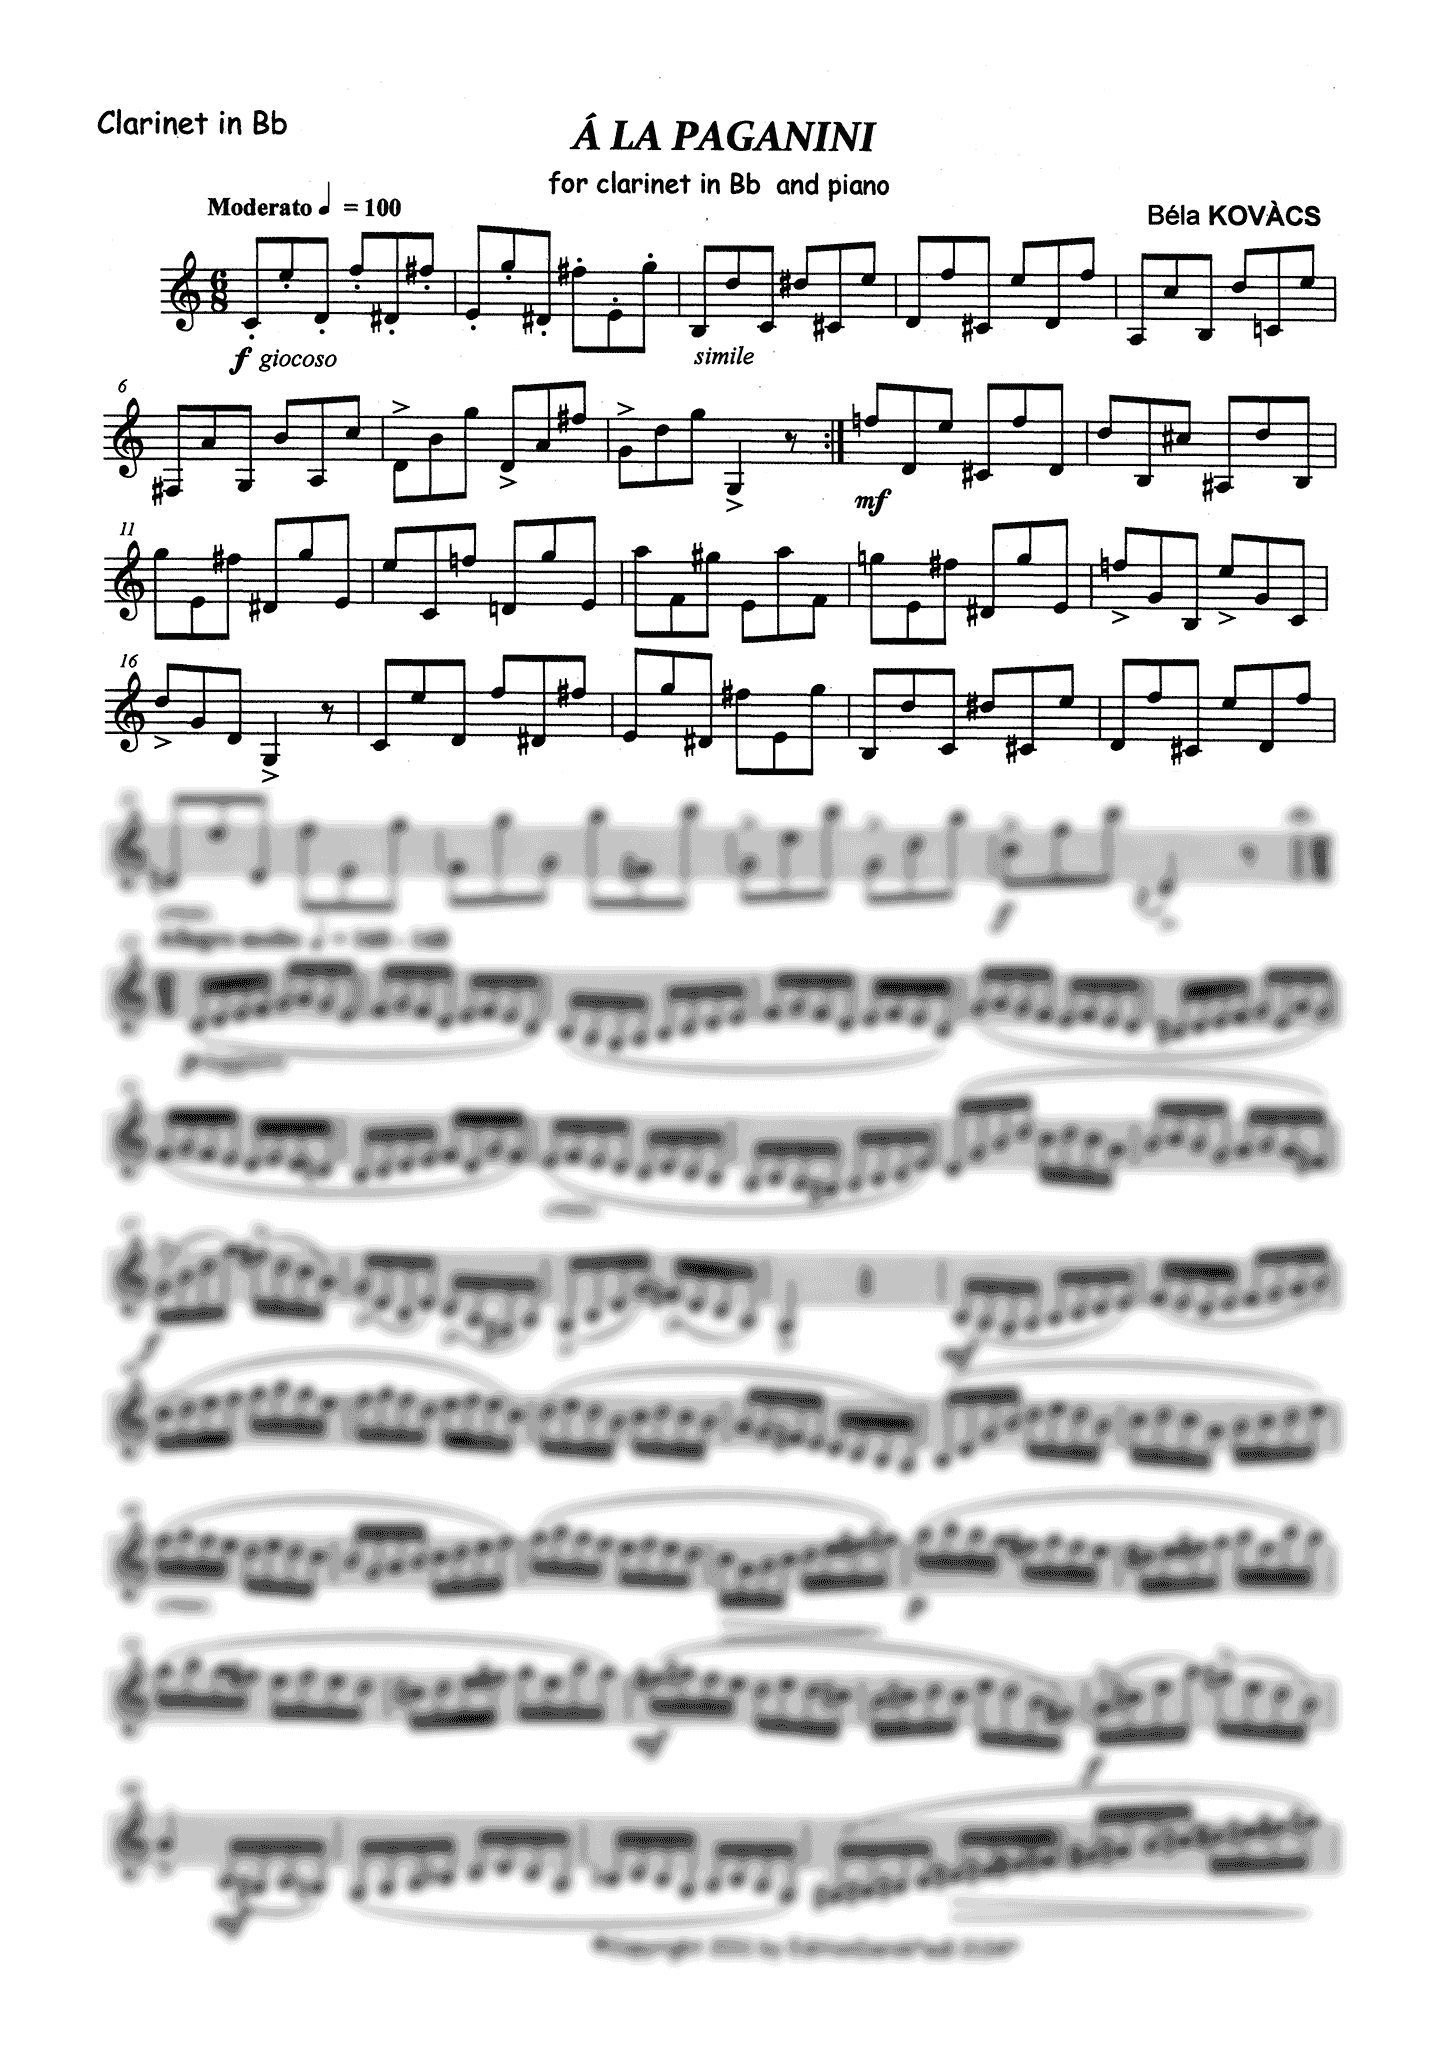 Kovács à la Paganini Clarinet part